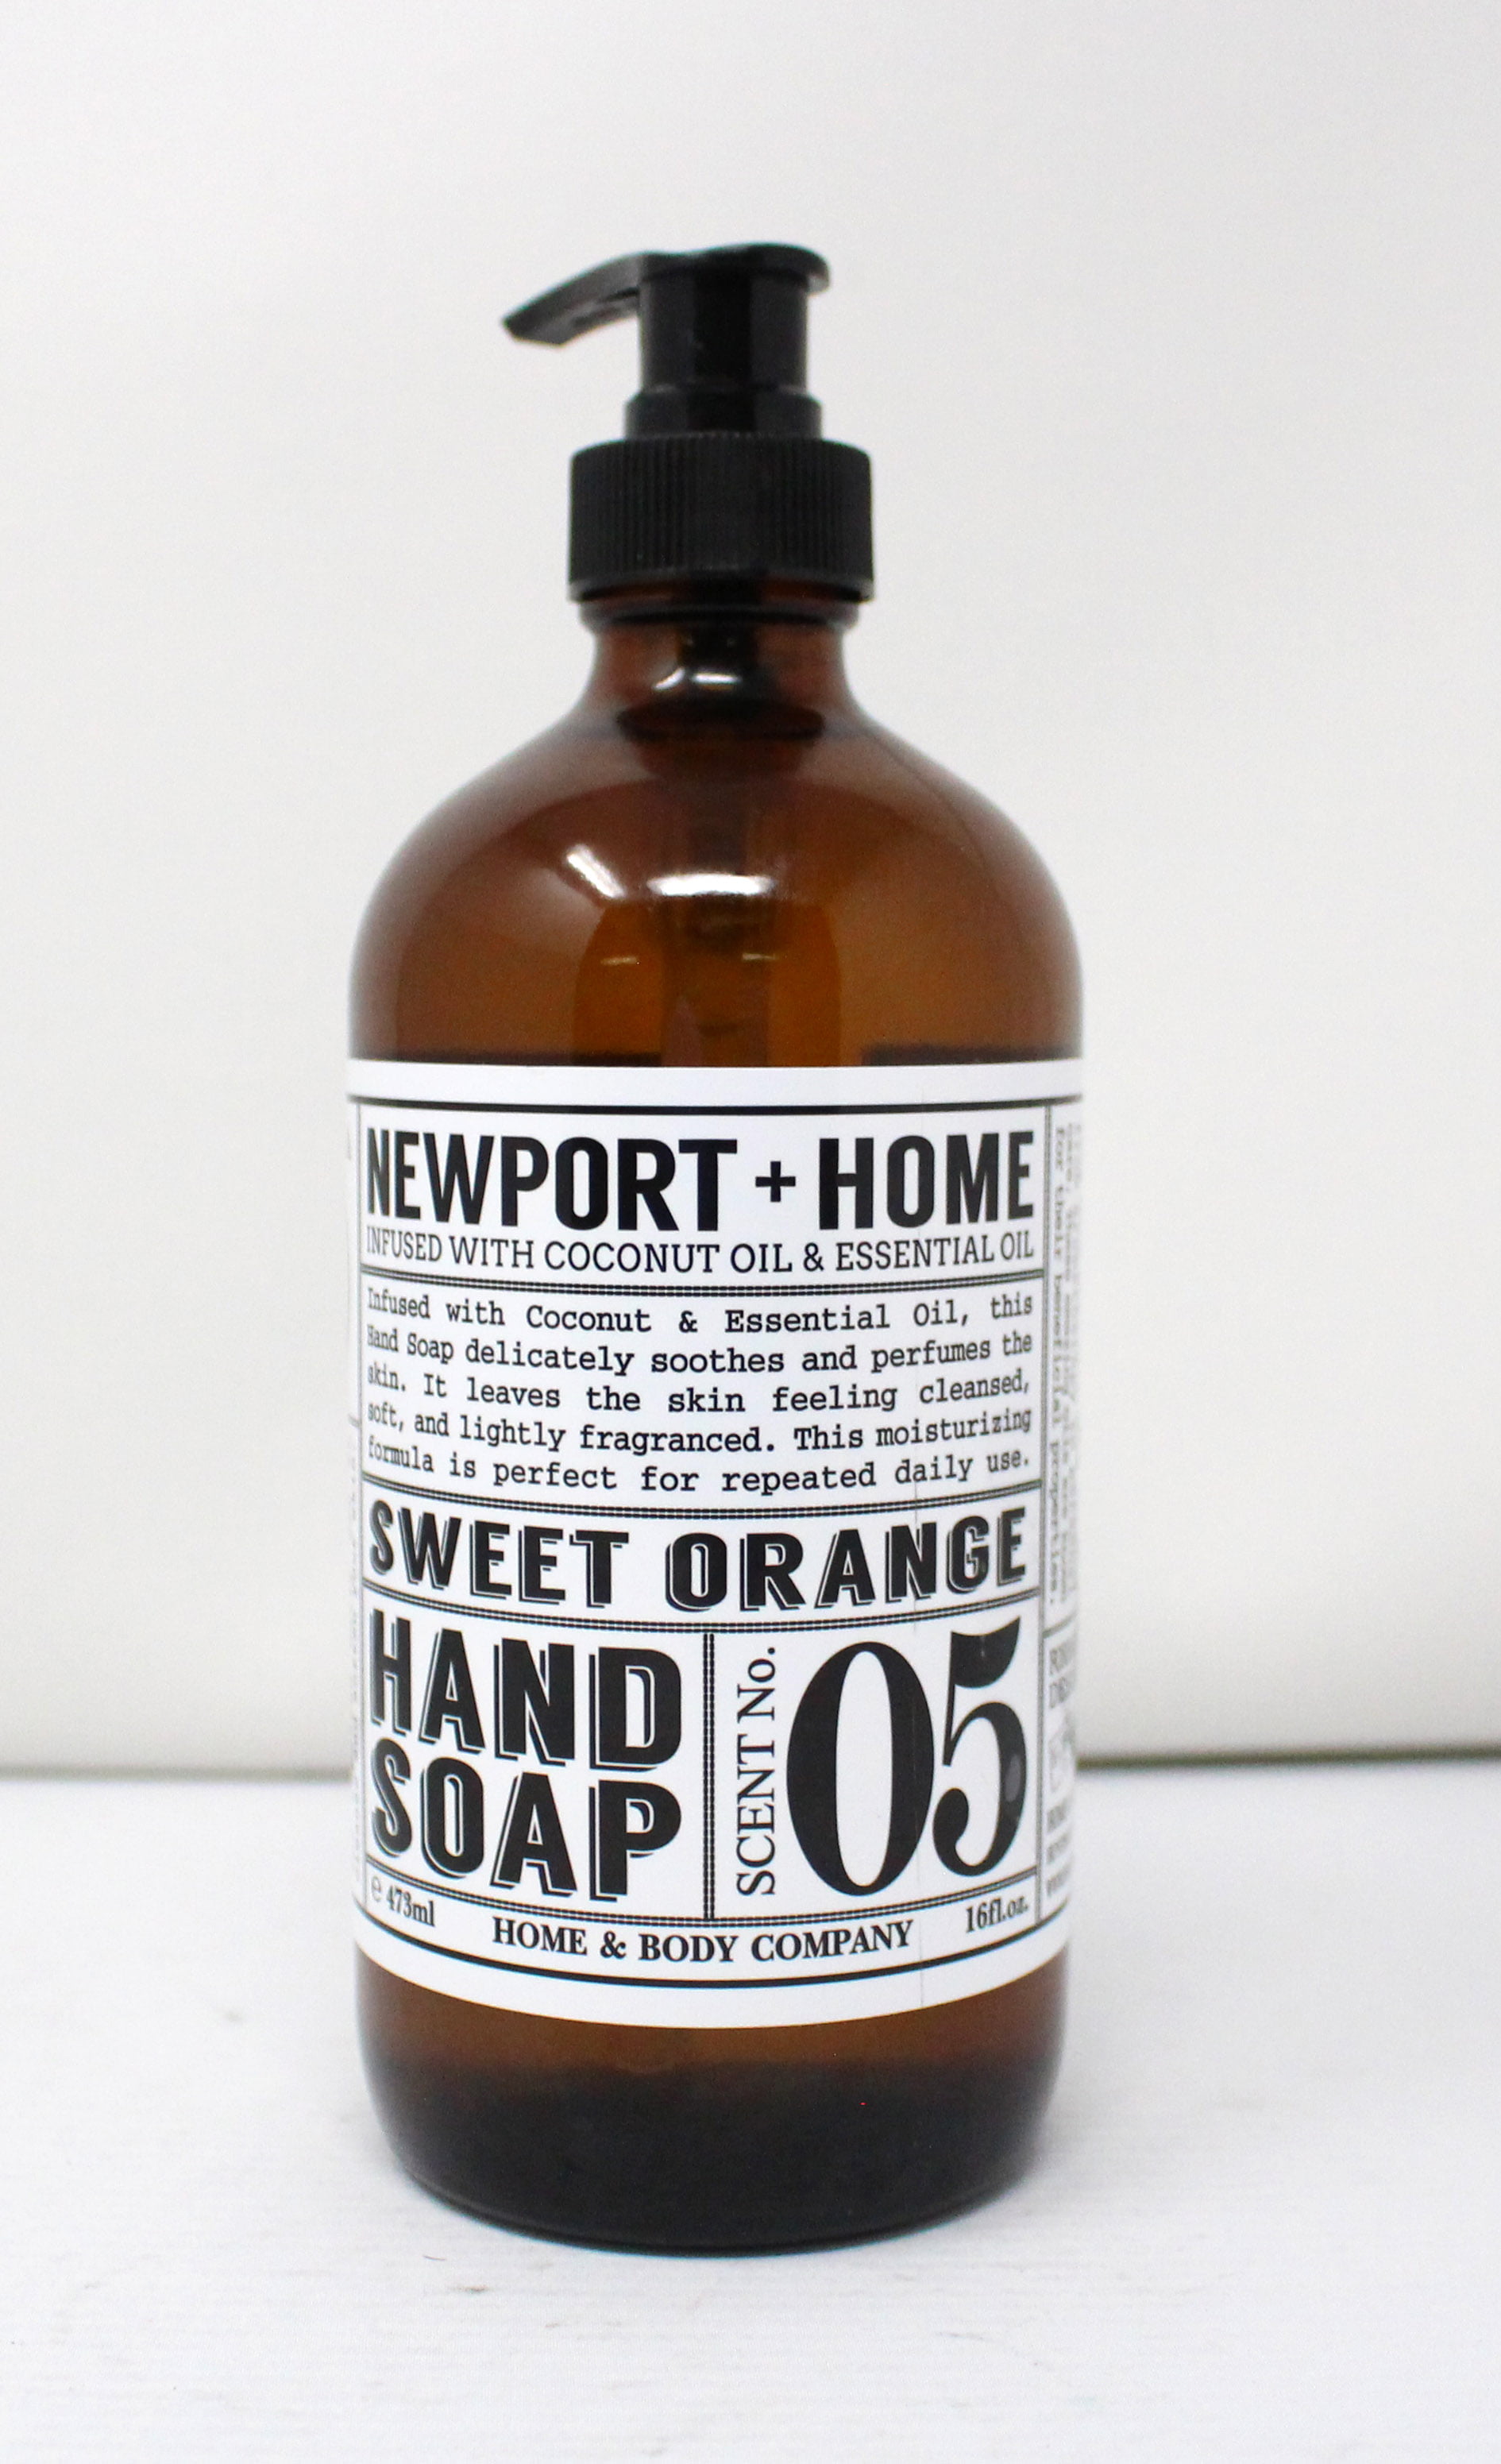 Home & Body Company Newport + Home Sweet Orange No. 05 Hand Soap 16